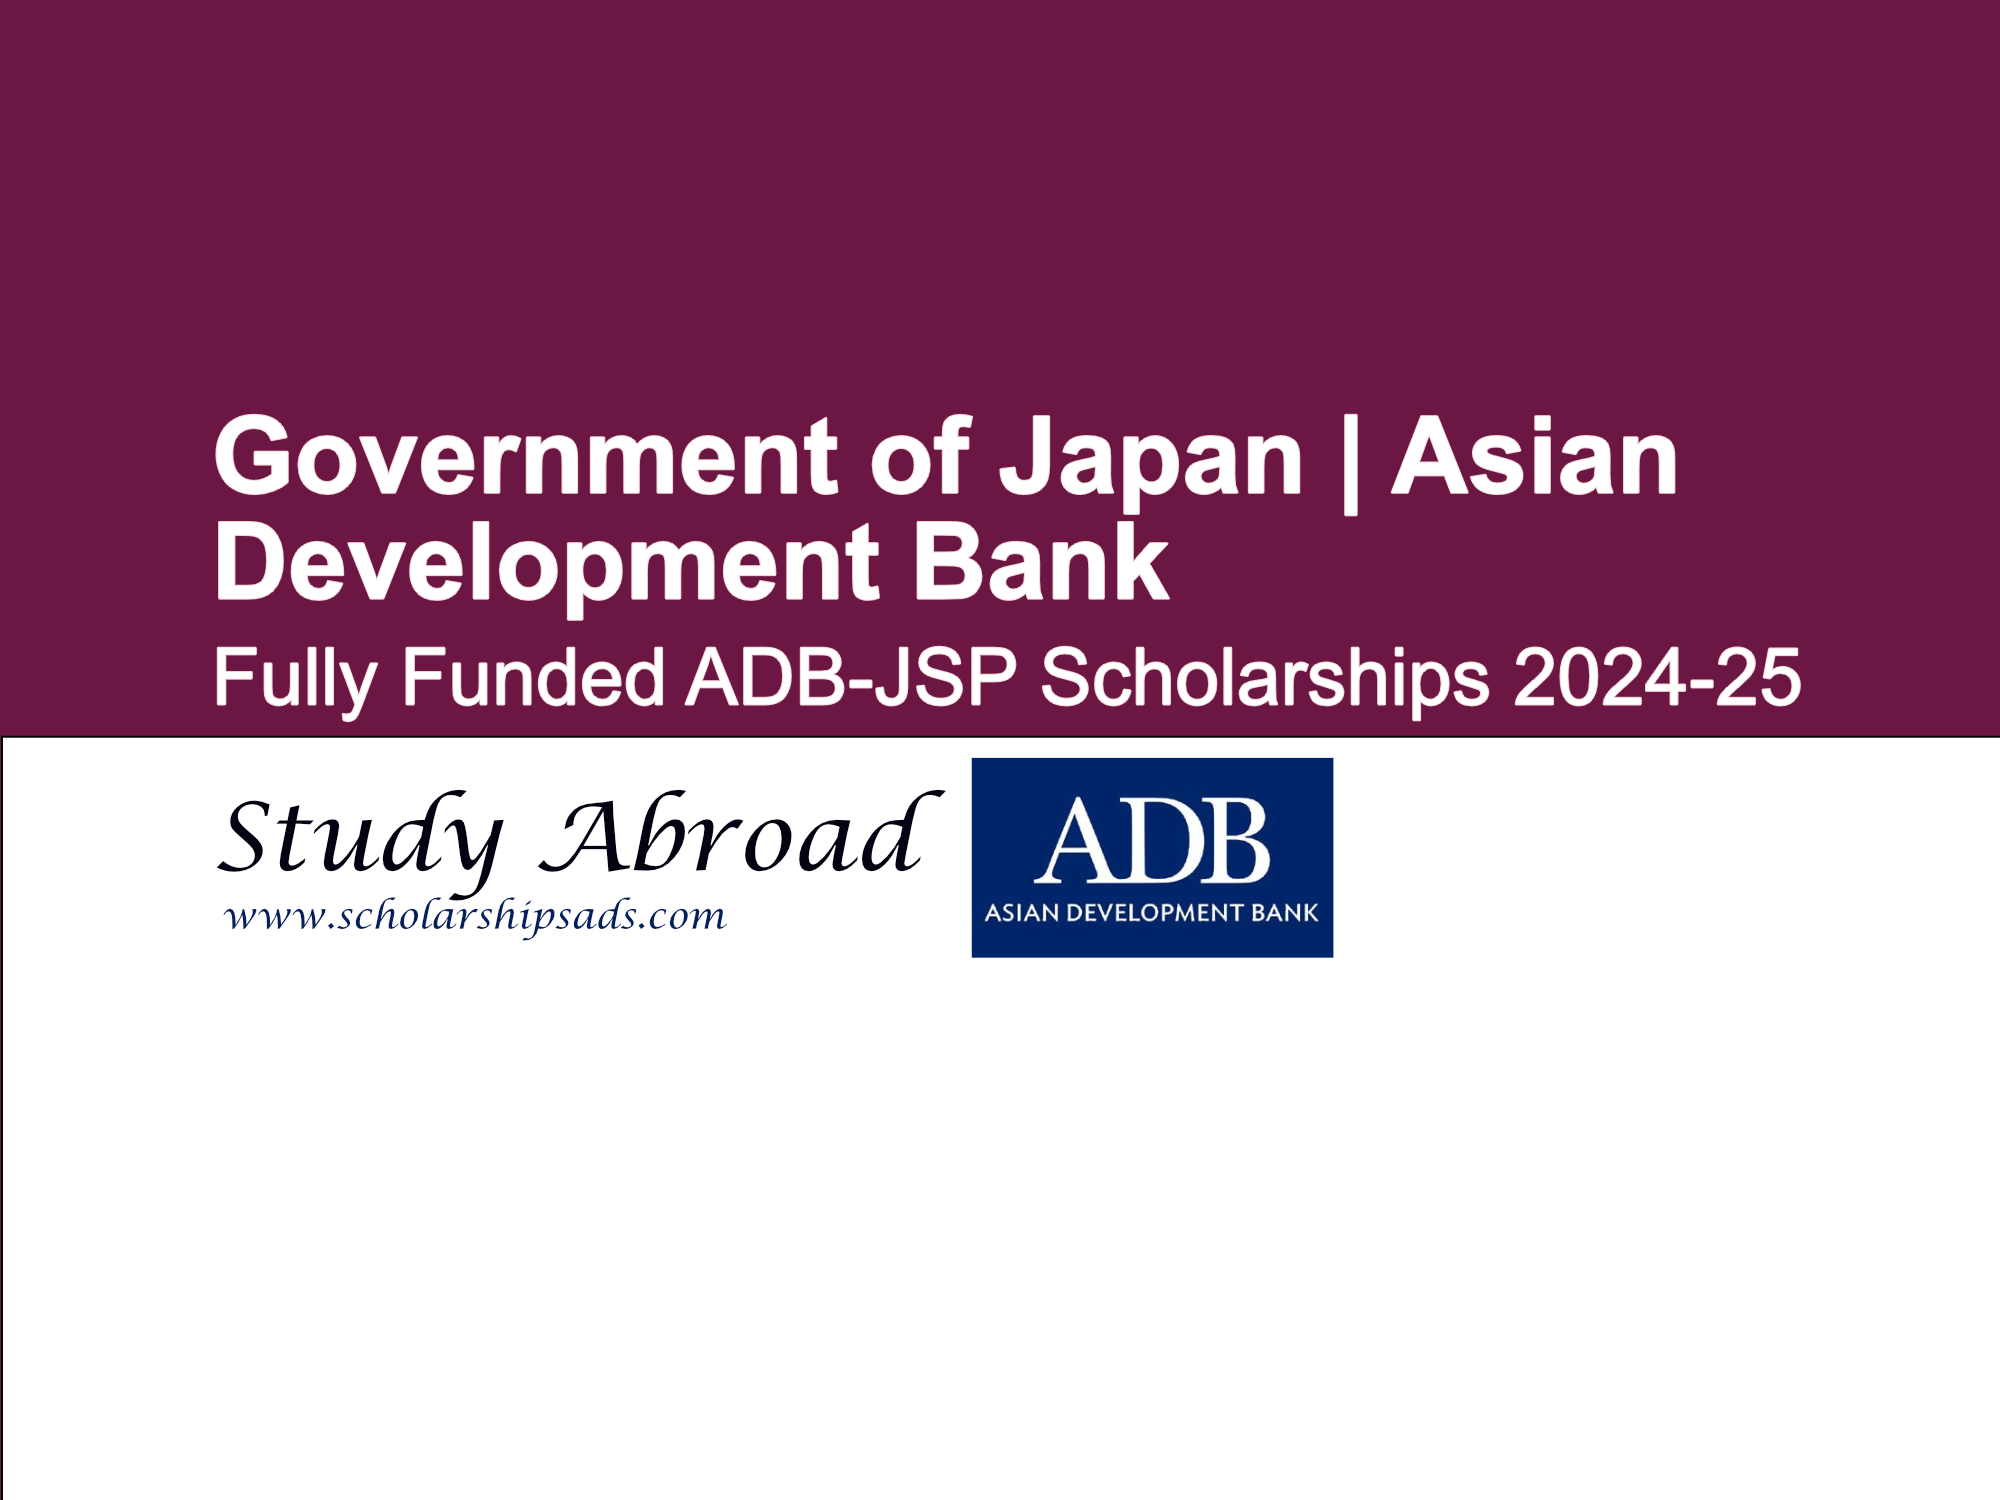 Government of Japan ADB Scholarships.